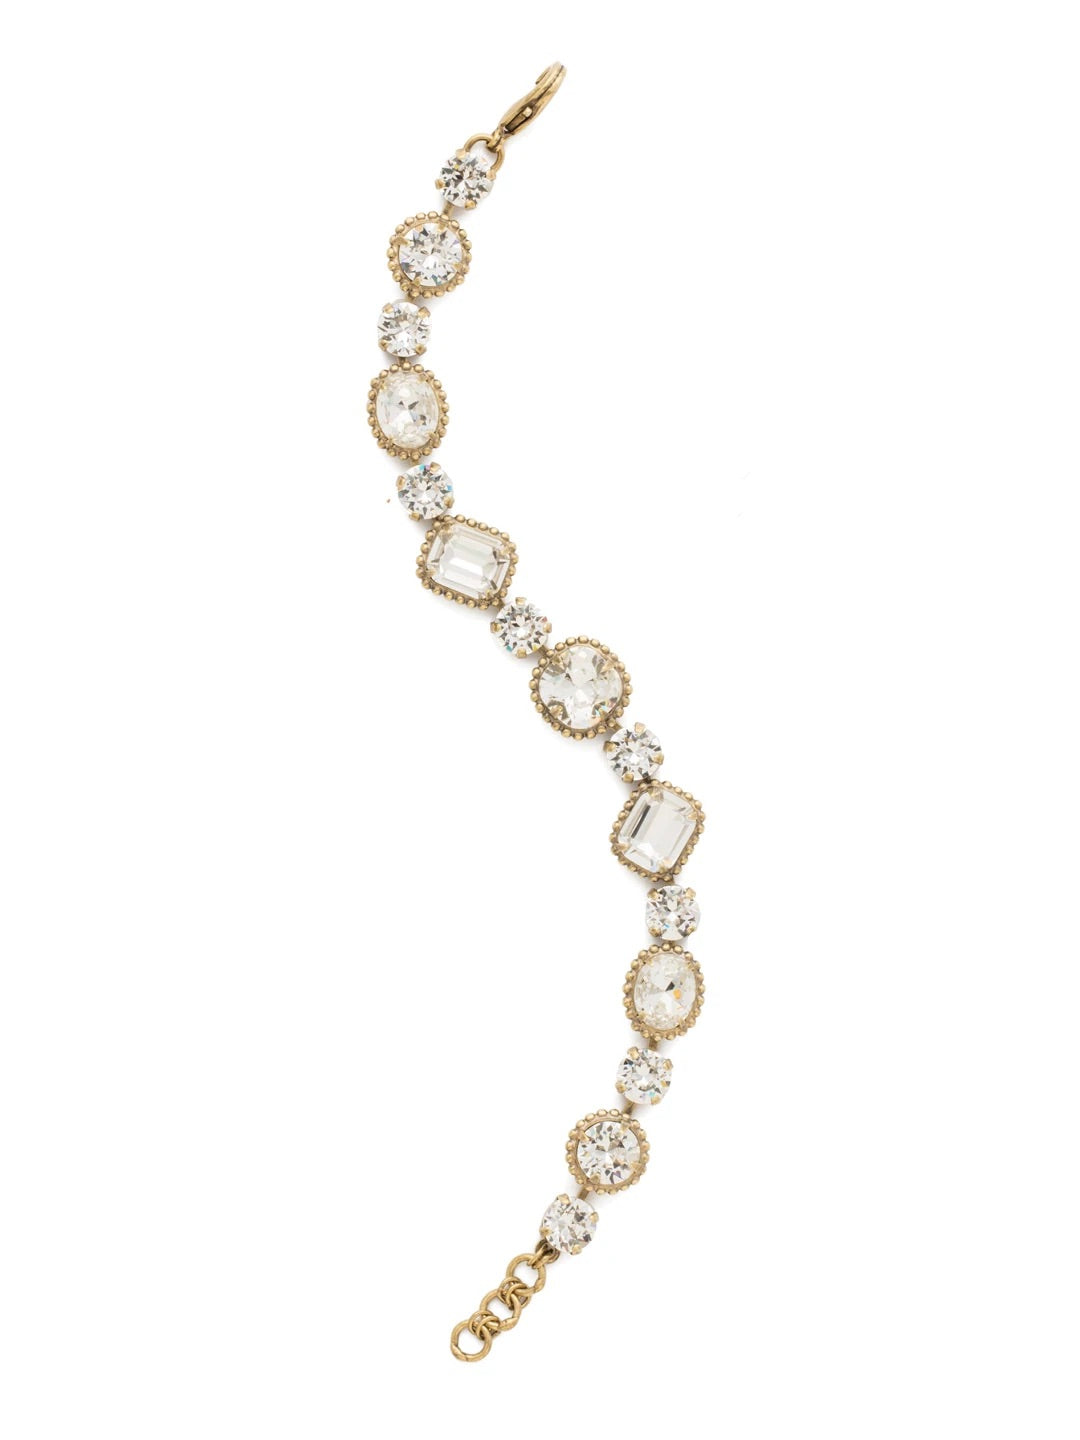 Dahlia Tennis Bracelet (Crystal)